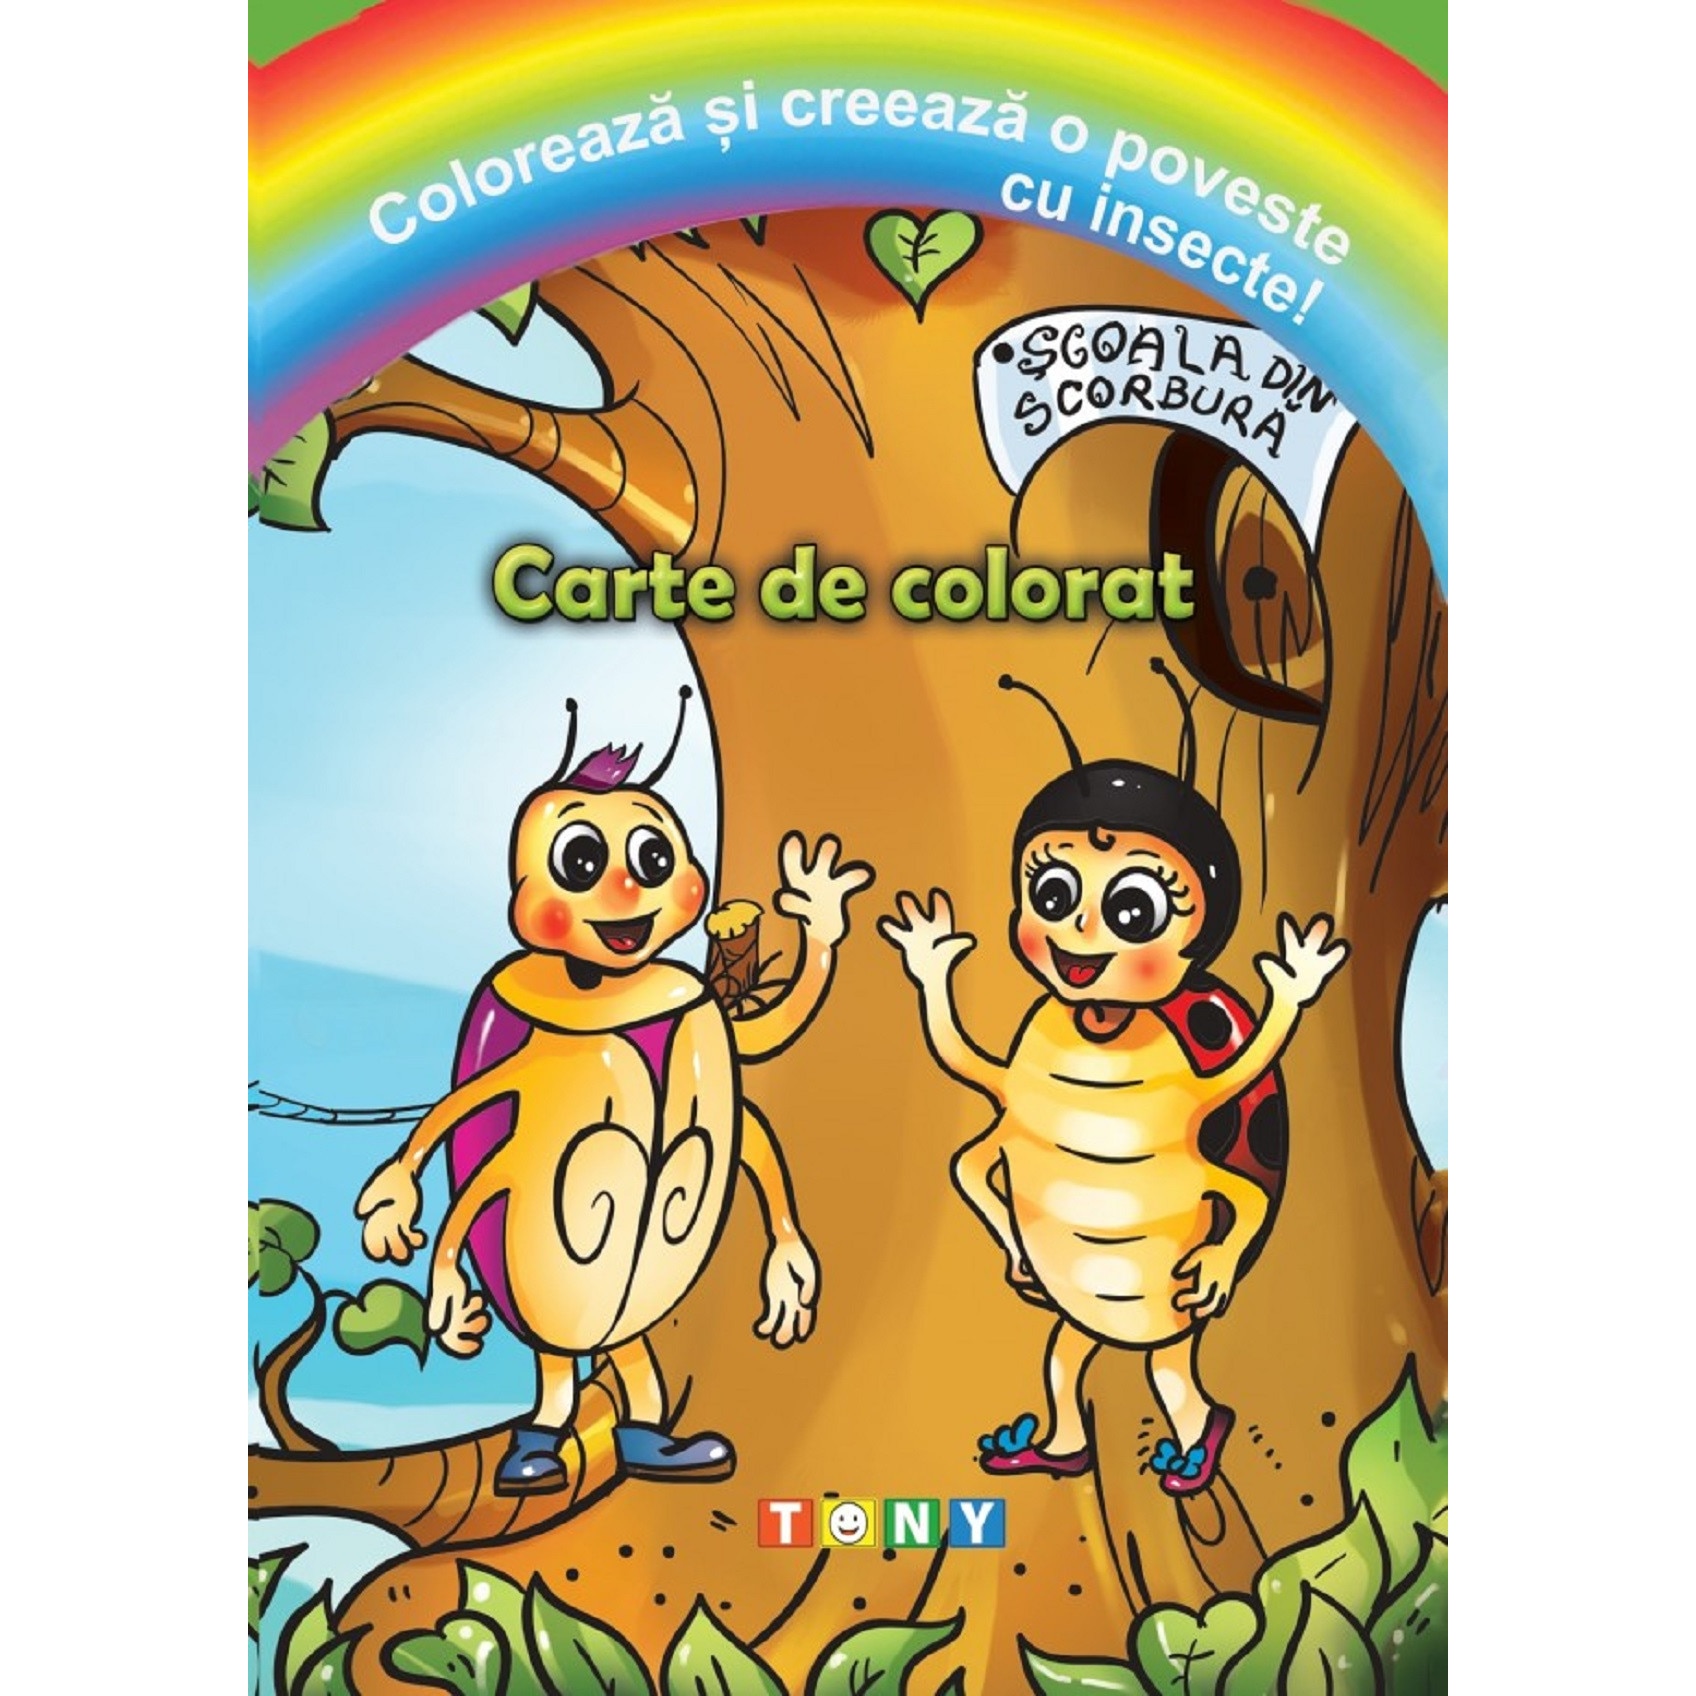 Automation salute Ruckus Coloreaza Si Creeaza O Poveste Cu Insecte! Carte De Colorat - eMAG.ro